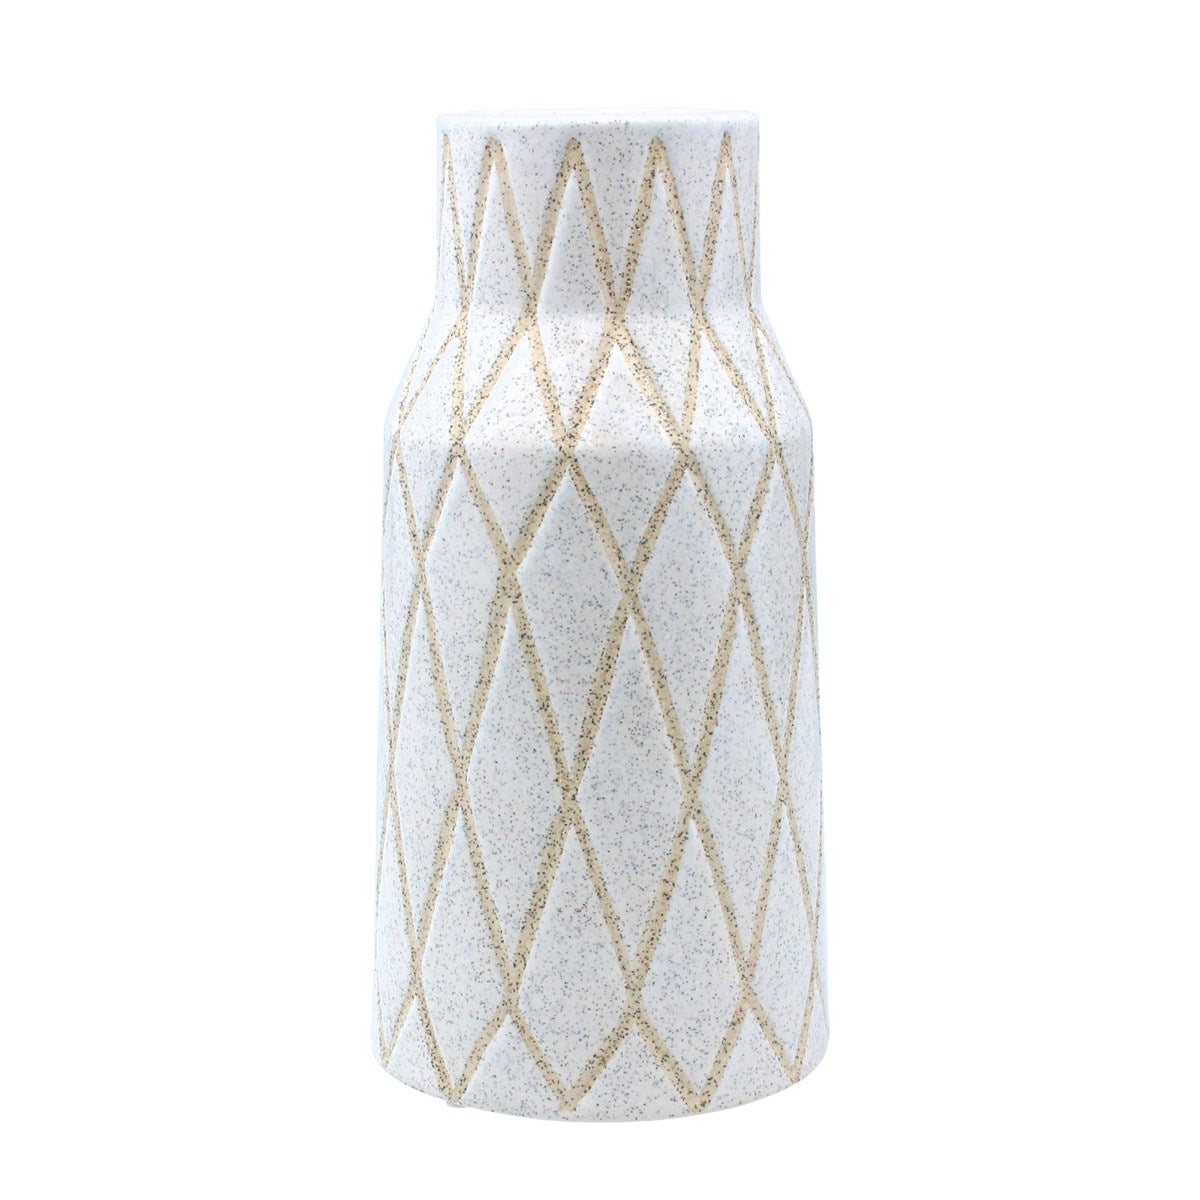 Speckle Geometric Ceramic Vase